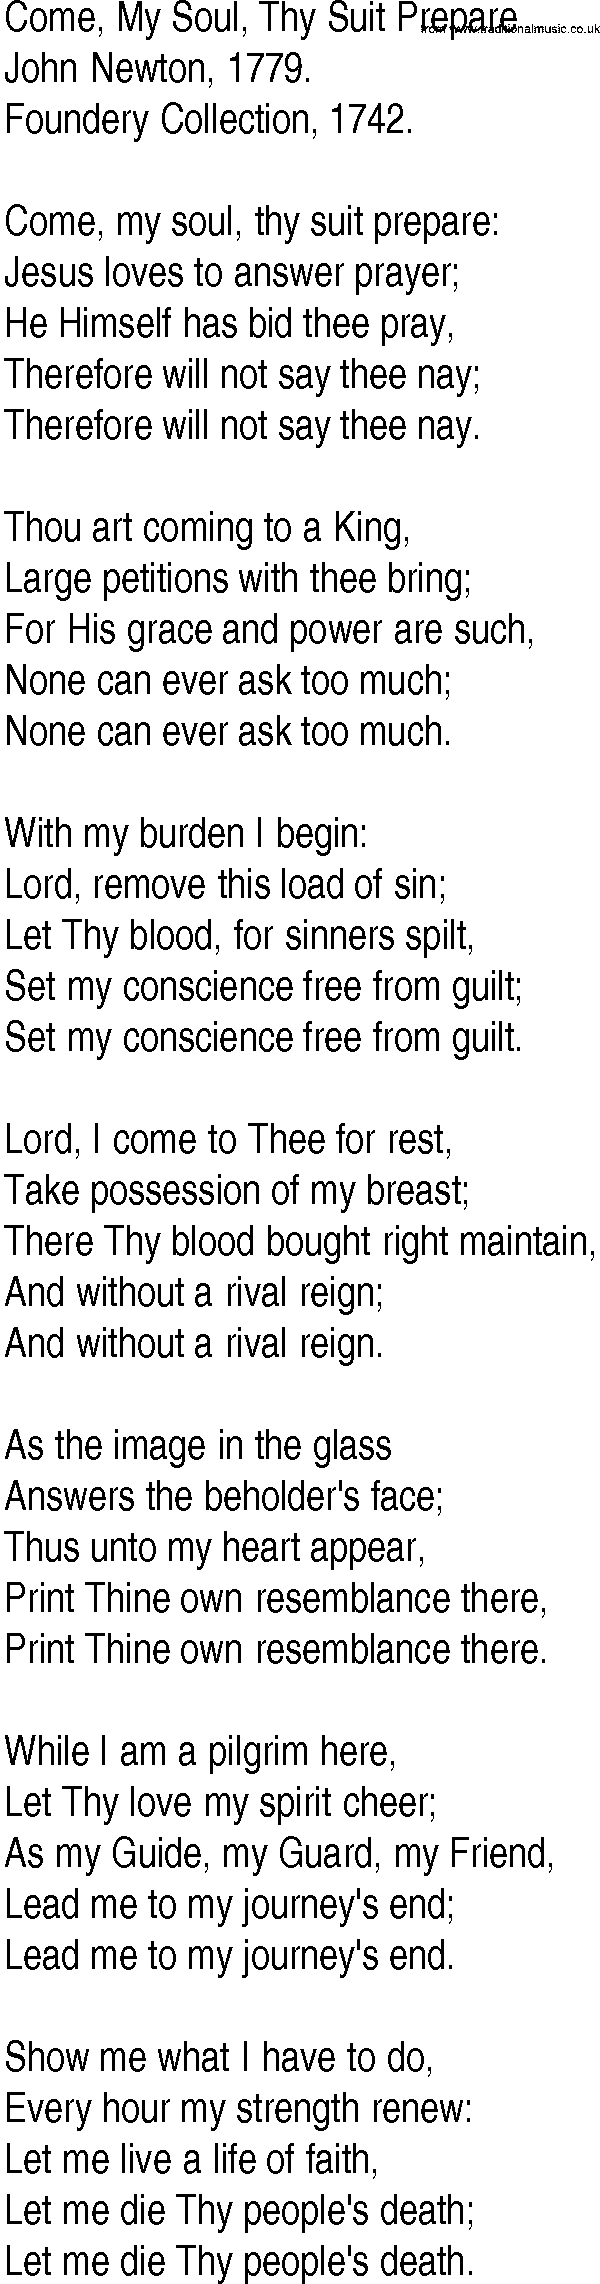 Hymn and Gospel Song: Come, My Soul, Thy Suit Prepare by John Newton lyrics